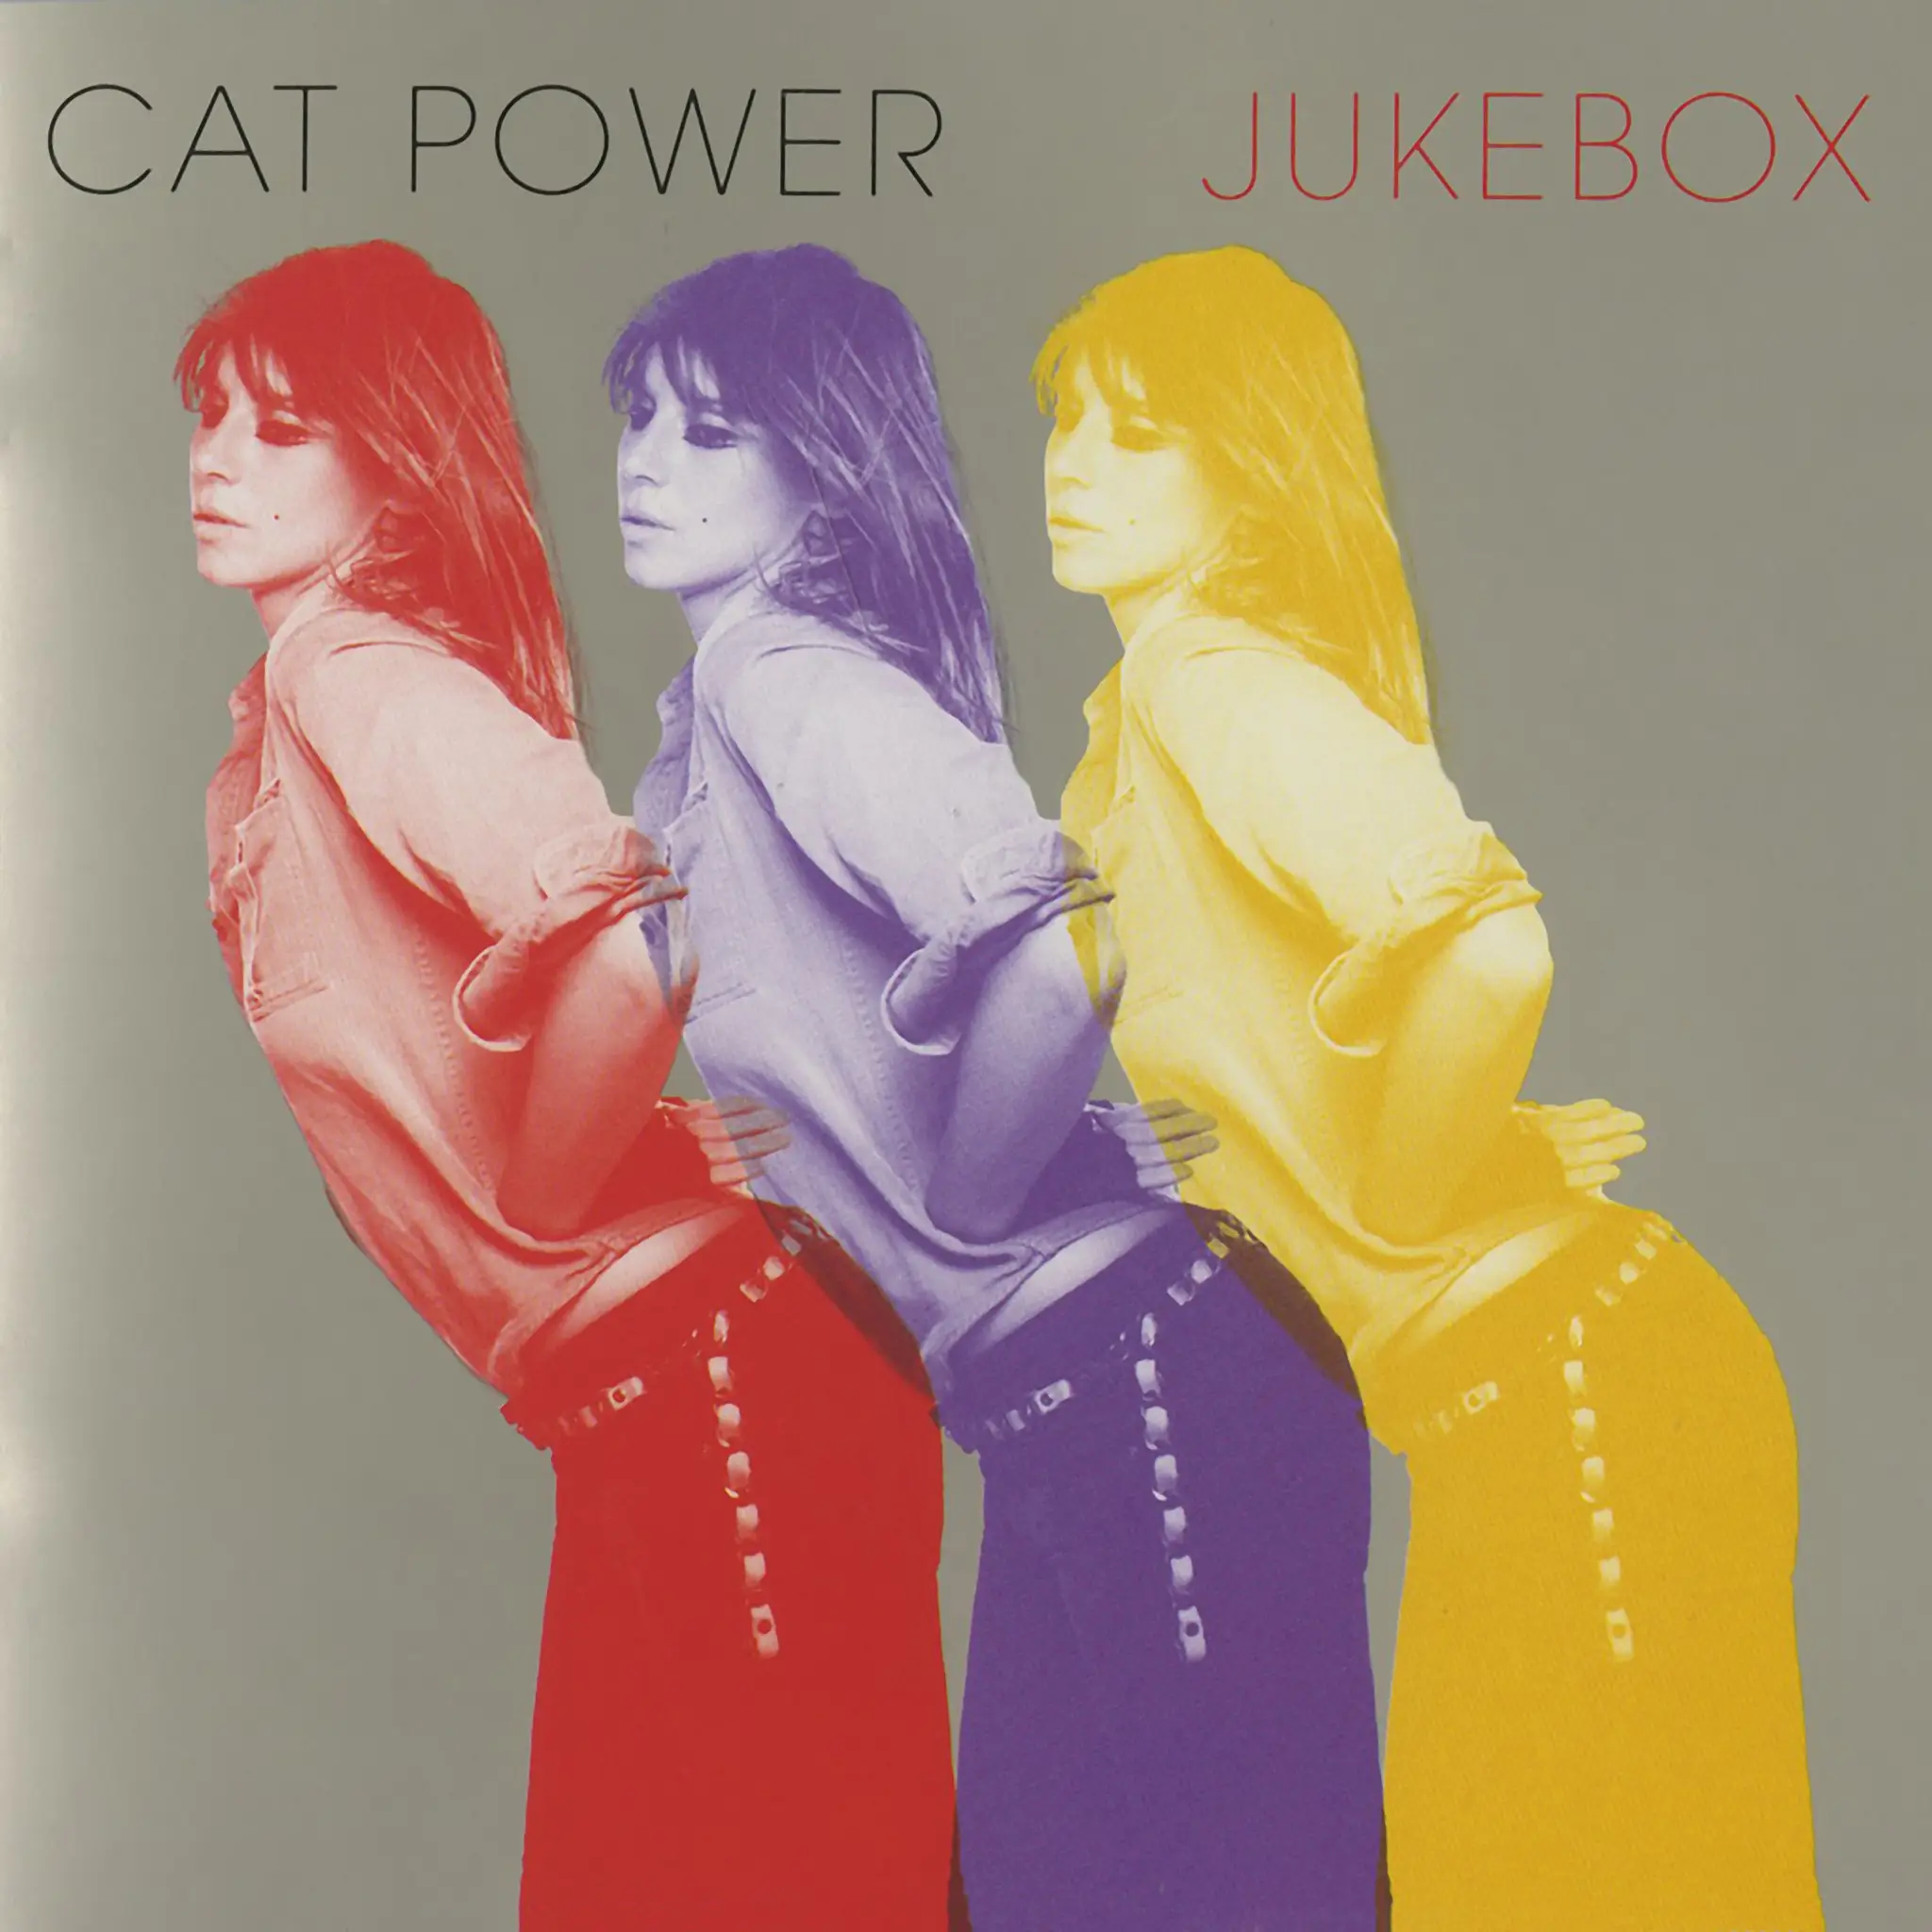 Buy Jukebox via Rough Trade